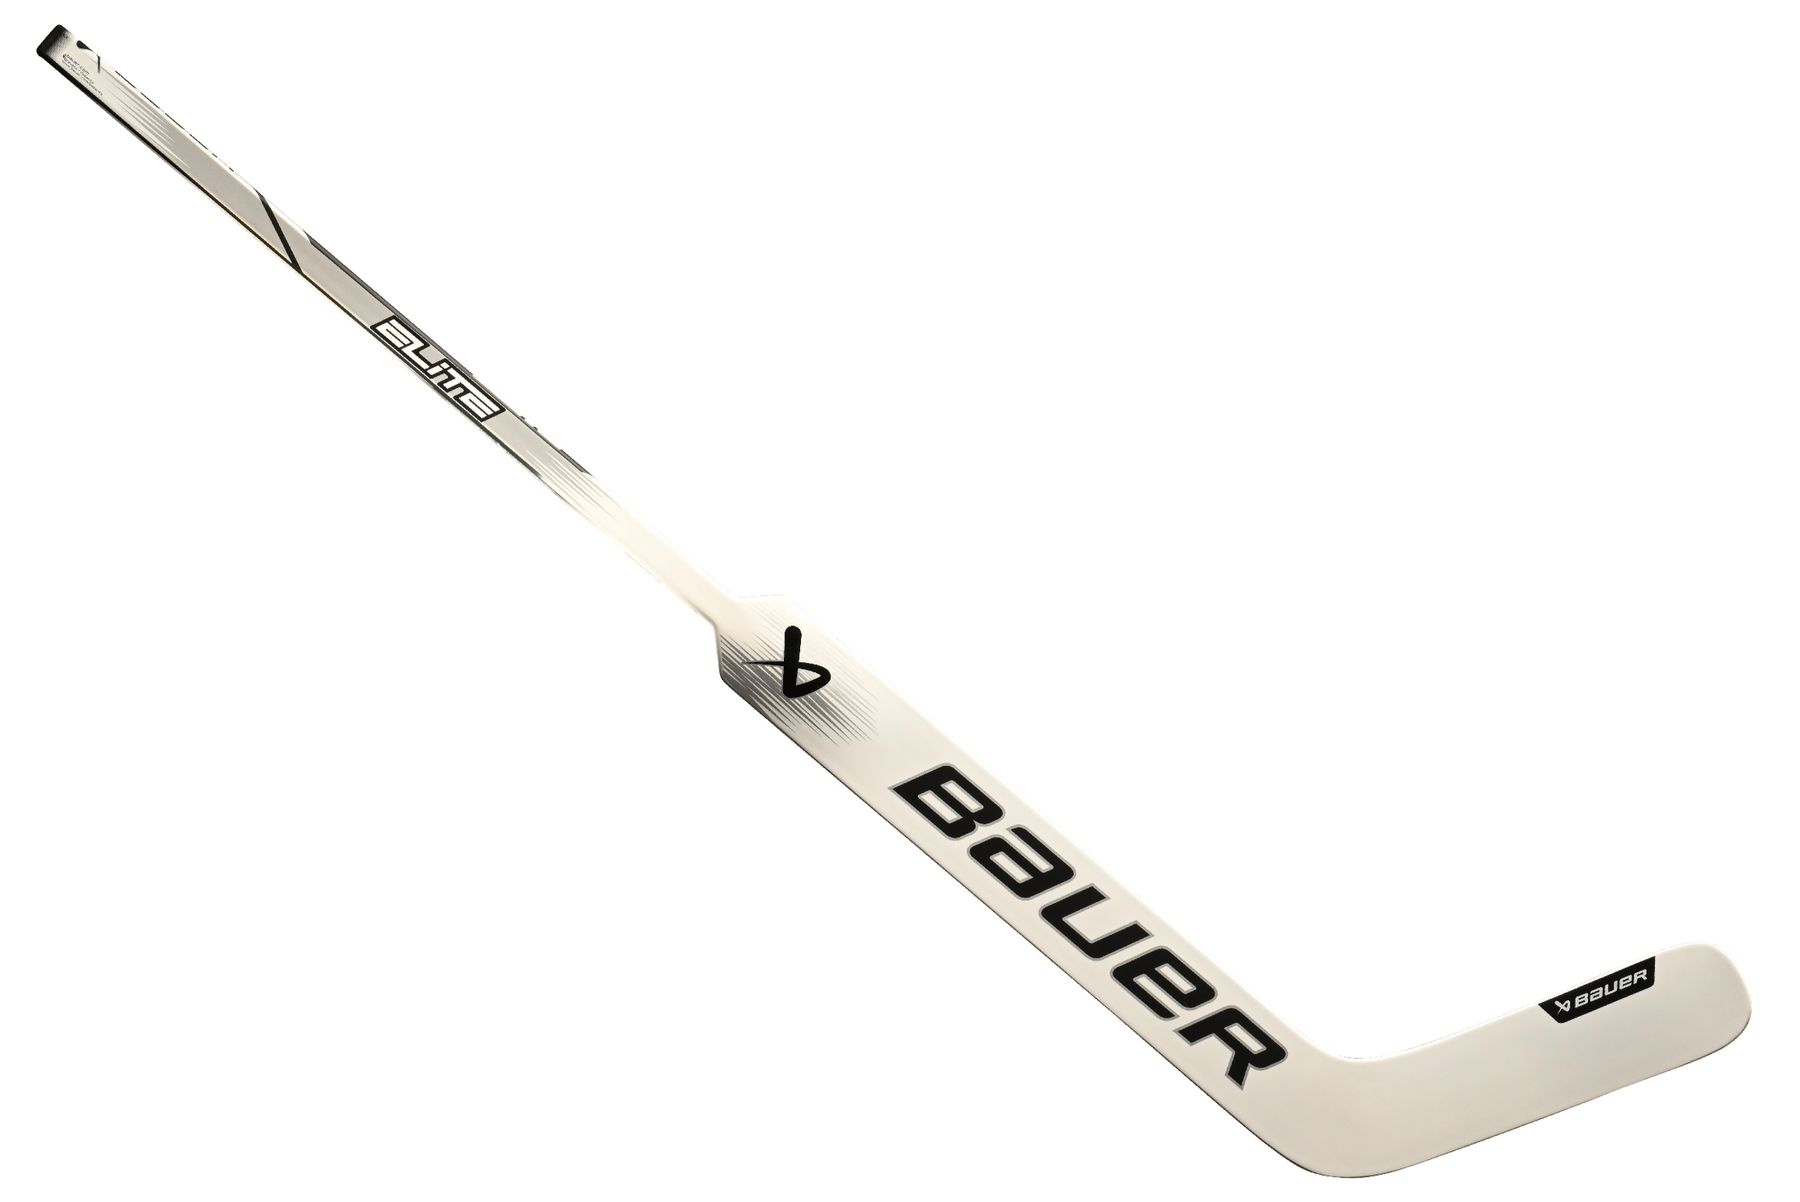 Bauer Elite 2023 Intermediate Goalie Stick (White/Black)